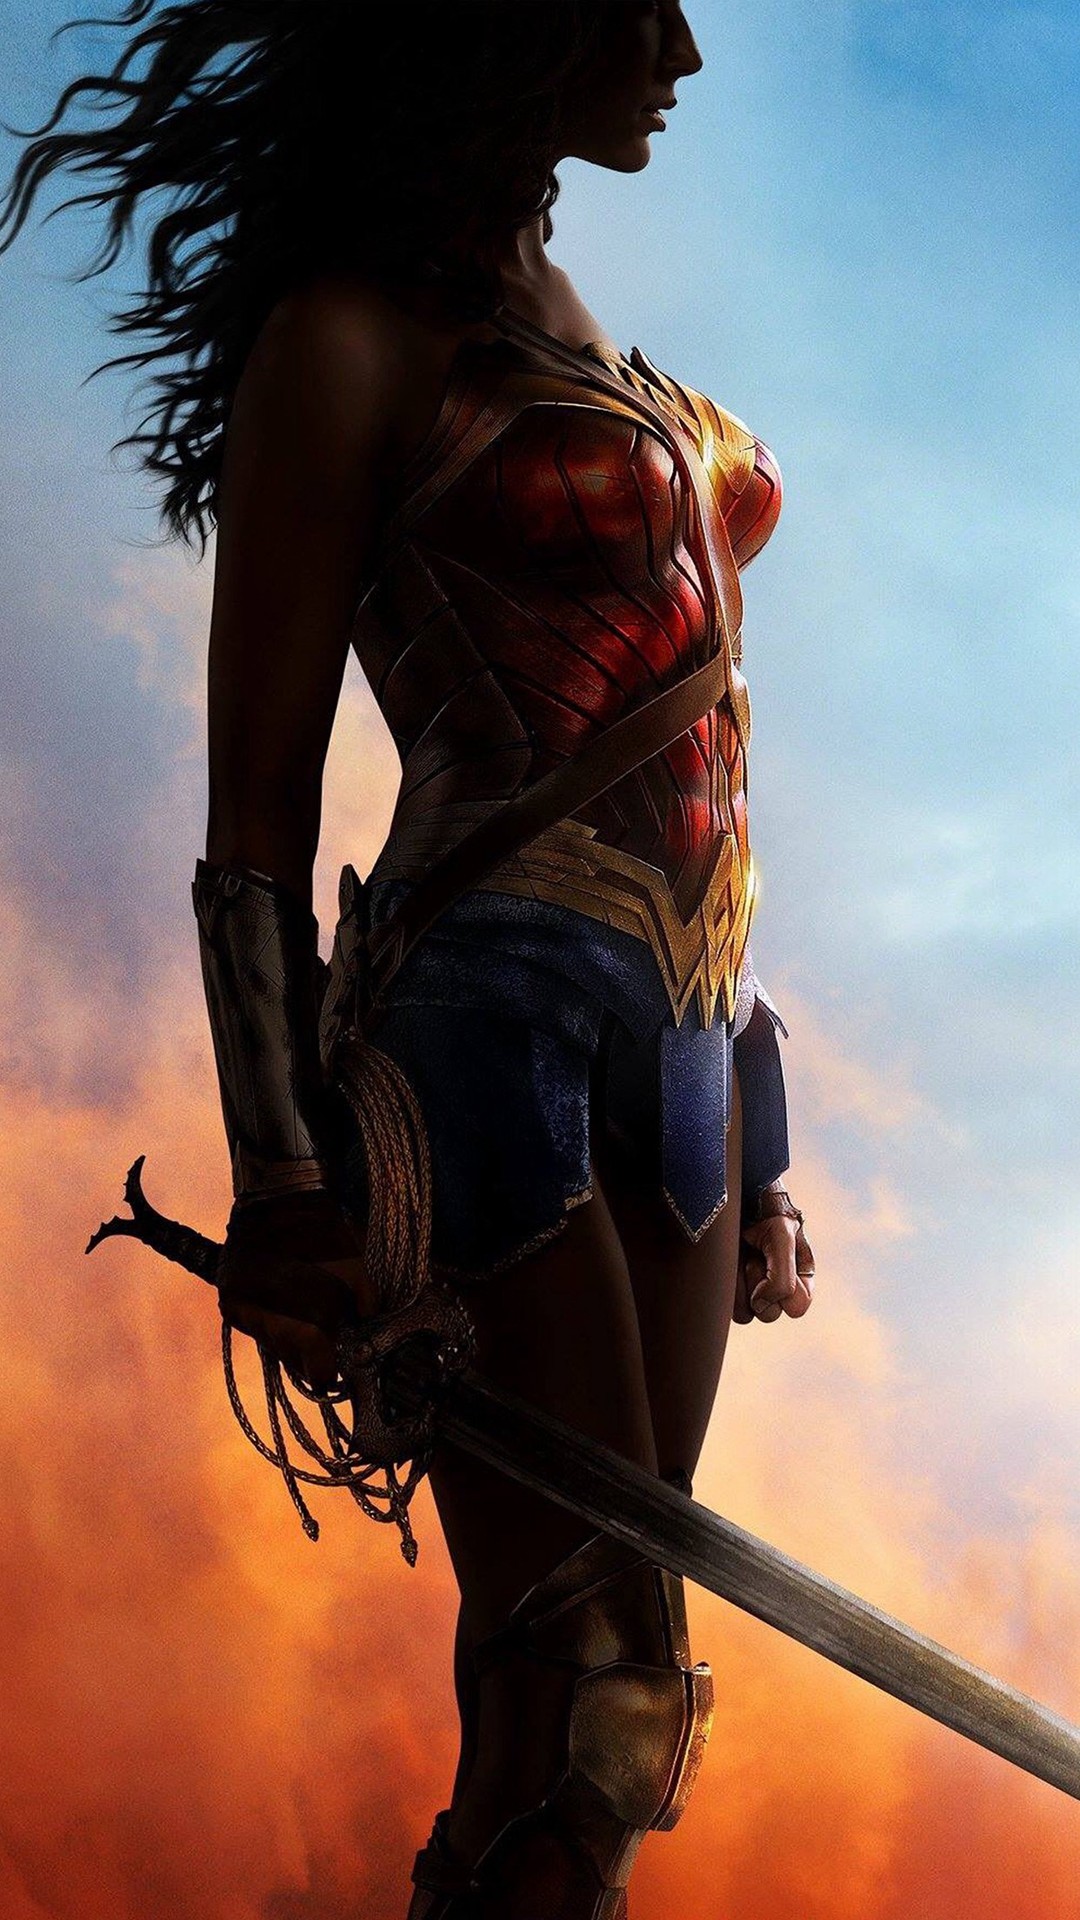 1080x1920 Wonder Woman Art Poster Hero Art Illustration iPhone 6 wallpaper